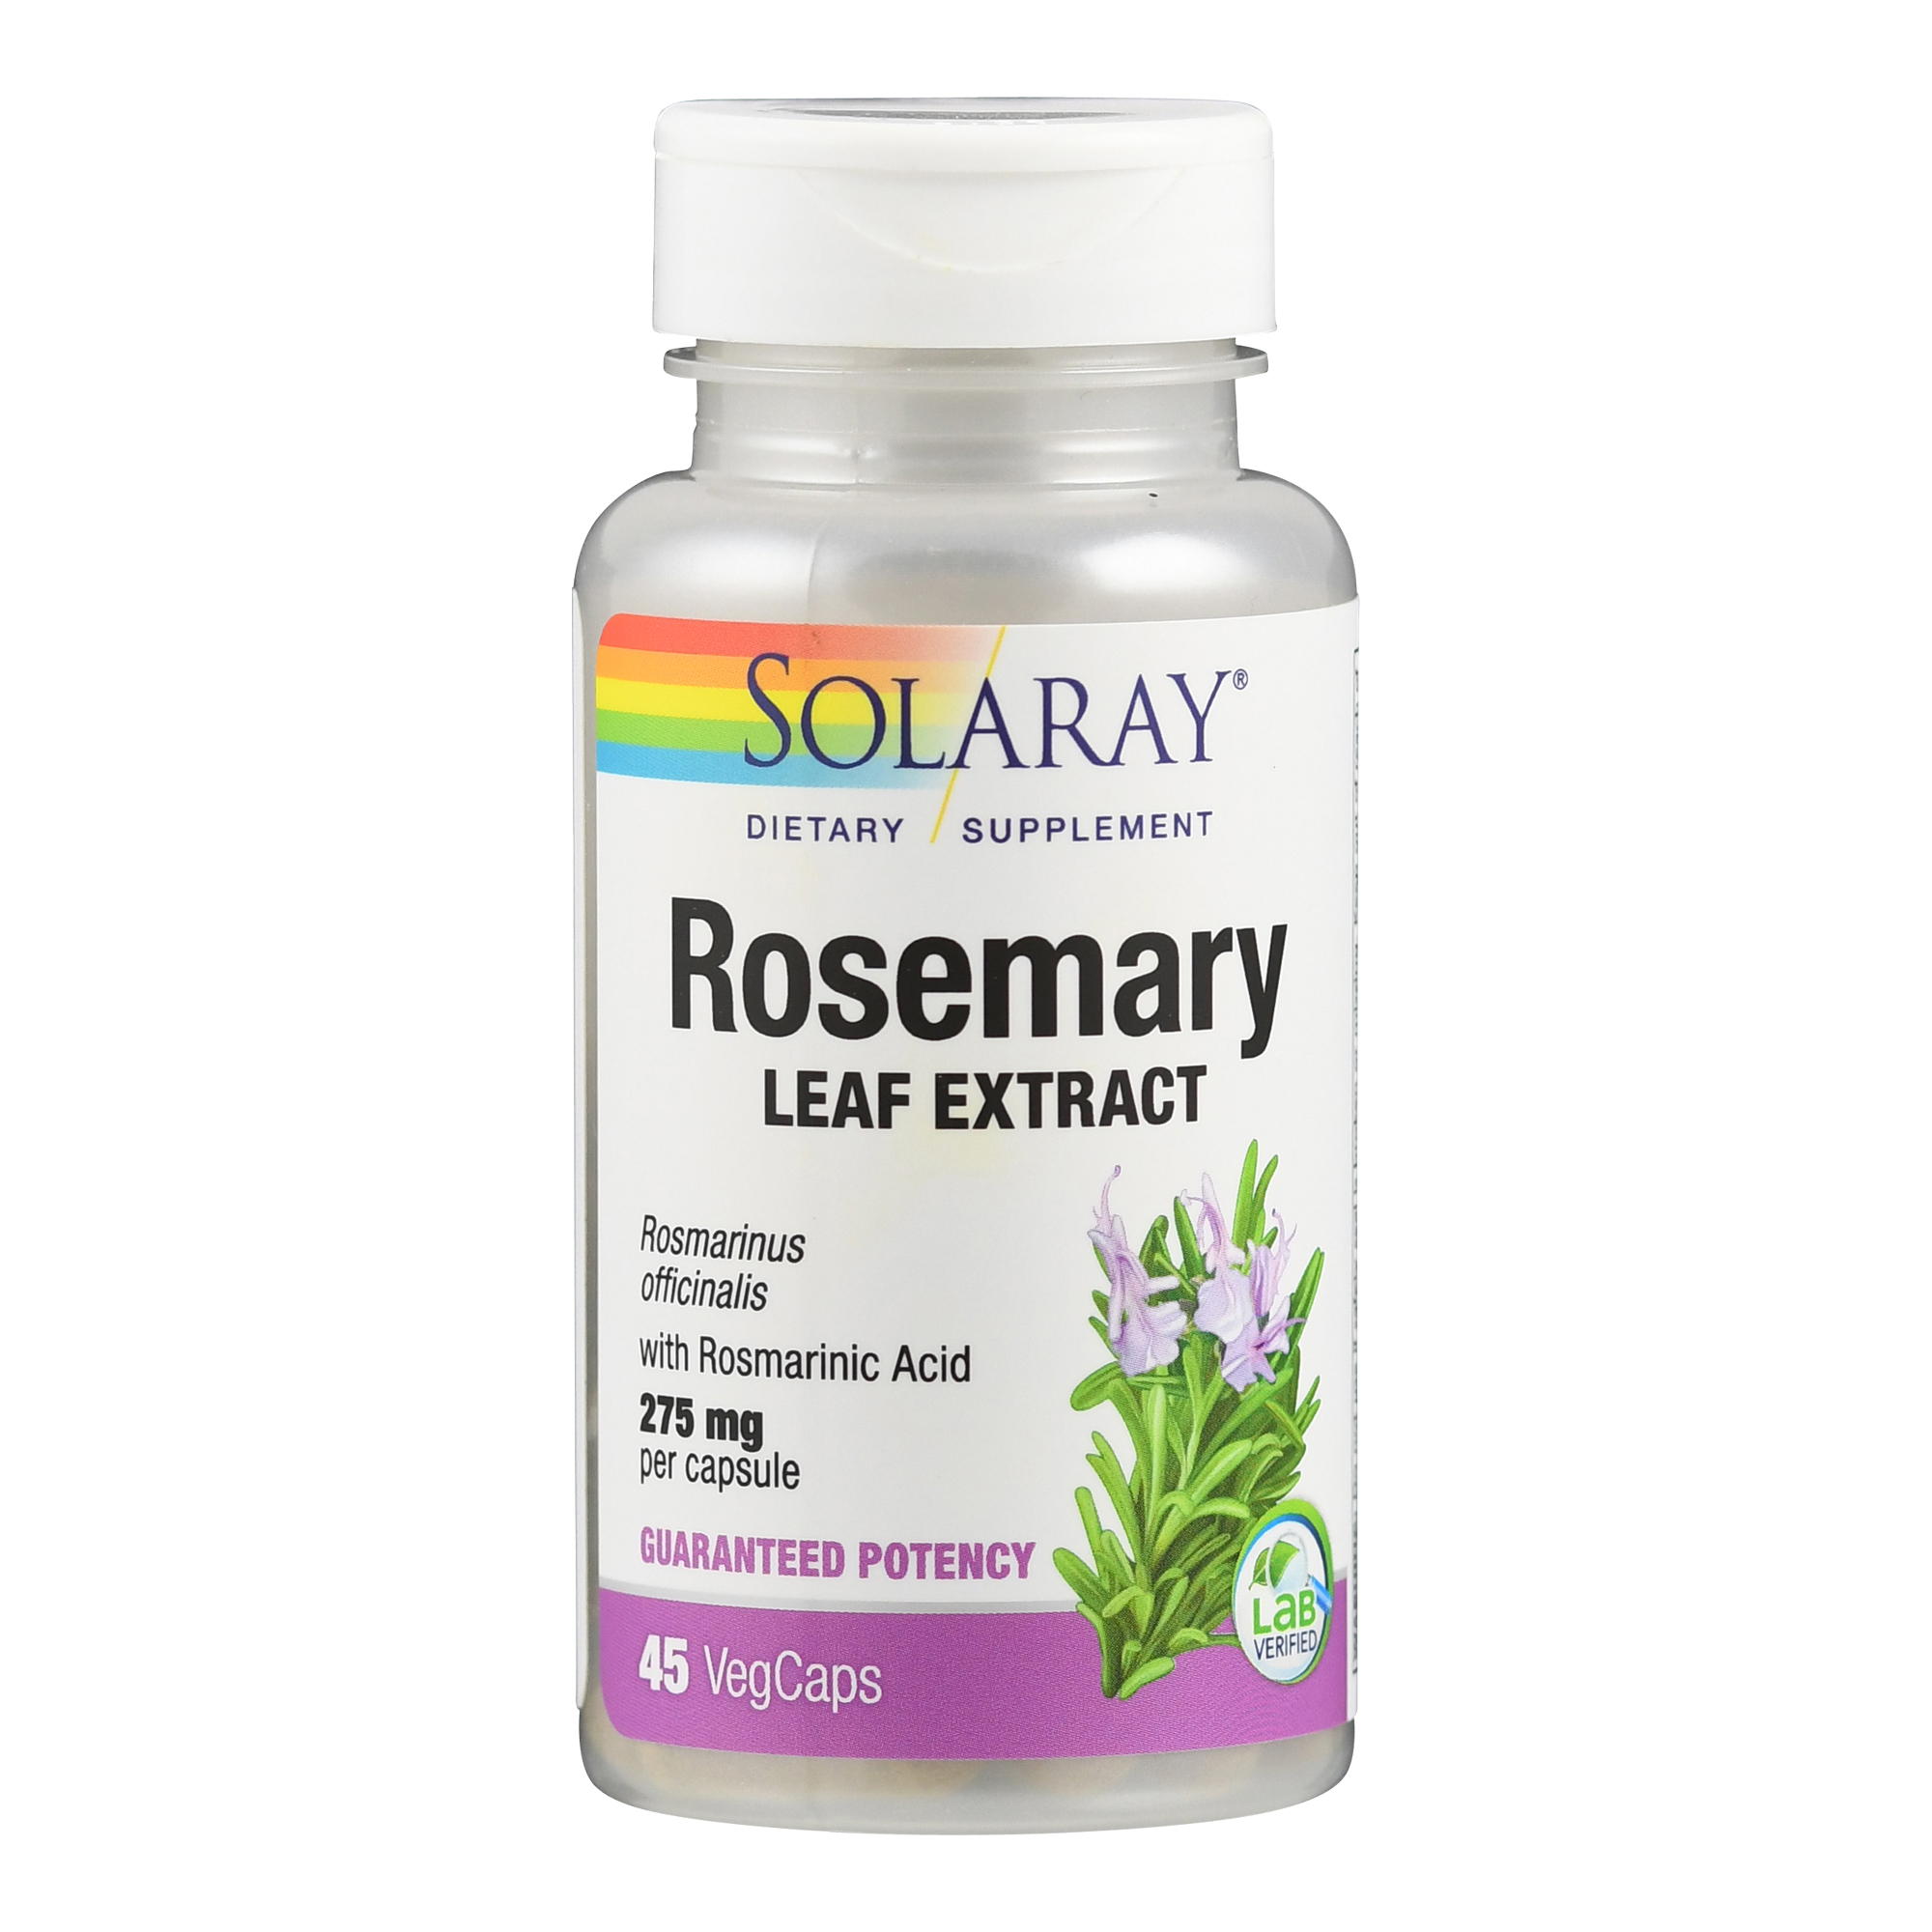 Rosmarin (Rosemary) von Solaray.